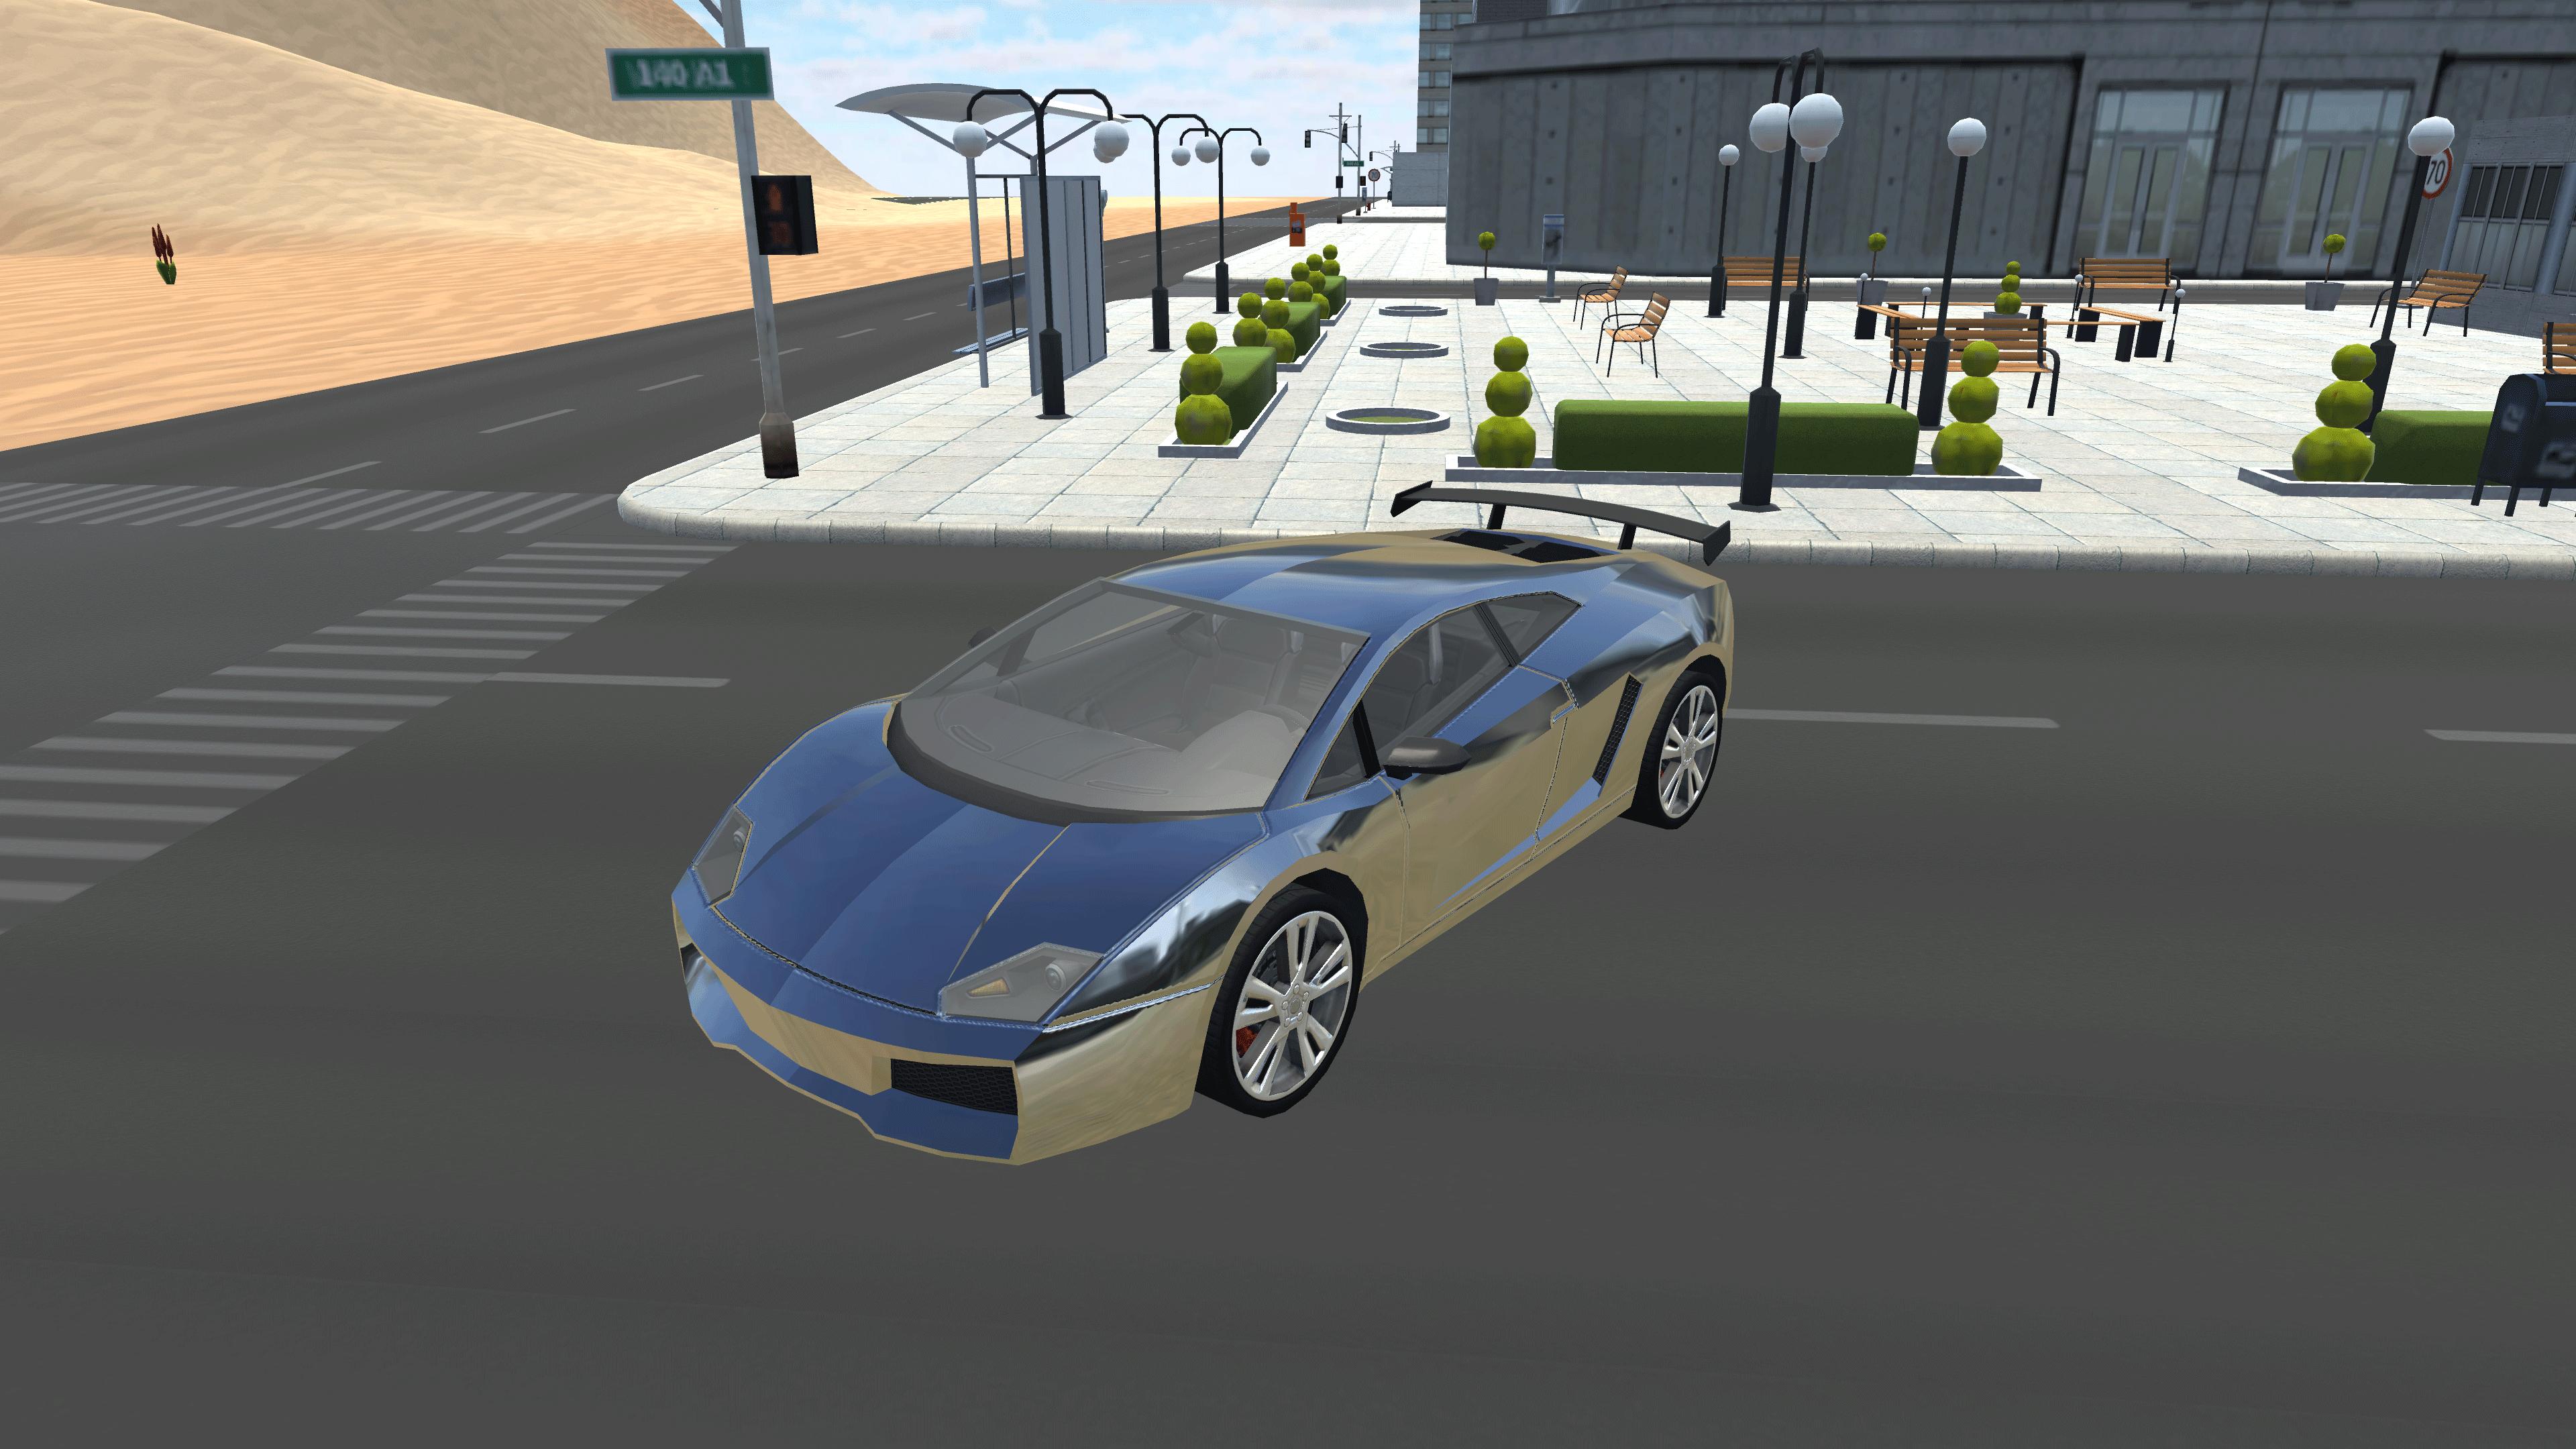 Ucds car driving simulator. Игра extreme car Driving. Extreme car Driving Simulator гонки. Extreme car Driving Simulator 2014. Игра extreme car Driving 2015.